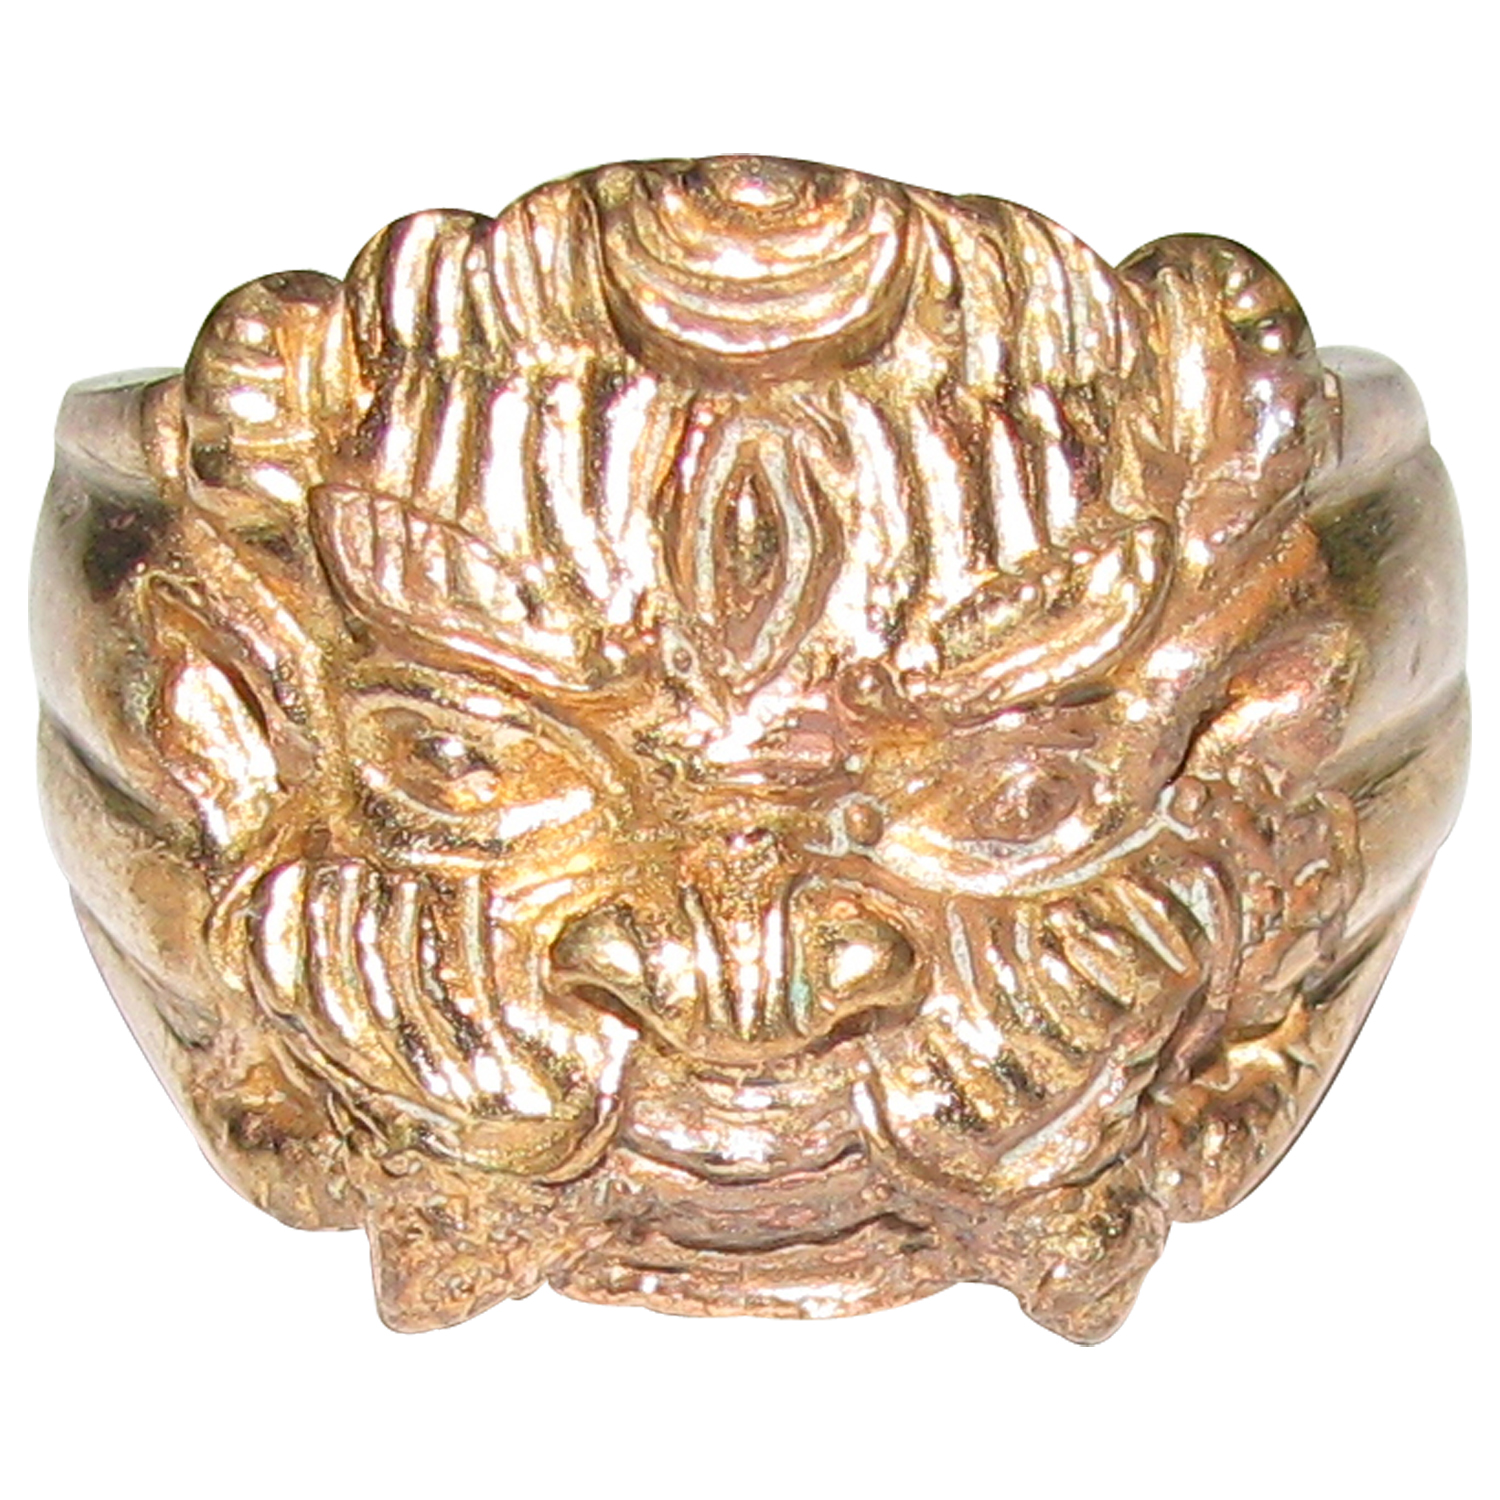 Aadhyathmik Aimpon Panchalogam Kann Drishti Ring Panchaloha Drishti Bommai Ring 5 Metals Panchadhatu Evil Eye Ring S965928